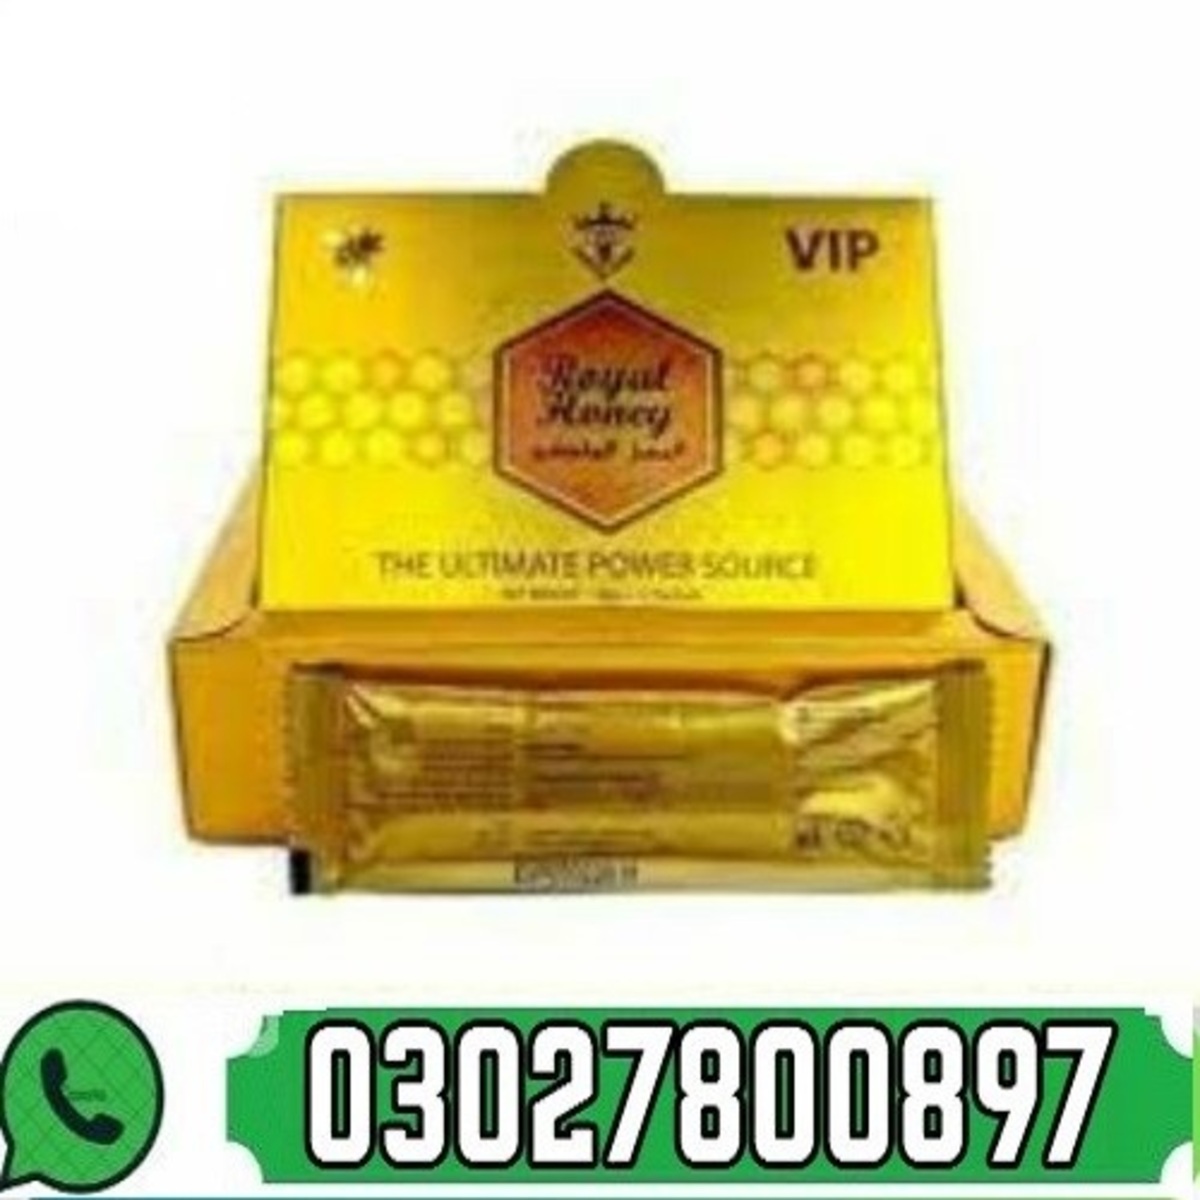 VIP Royal Honey price In Pakistan $ 0302!7800897 & best price